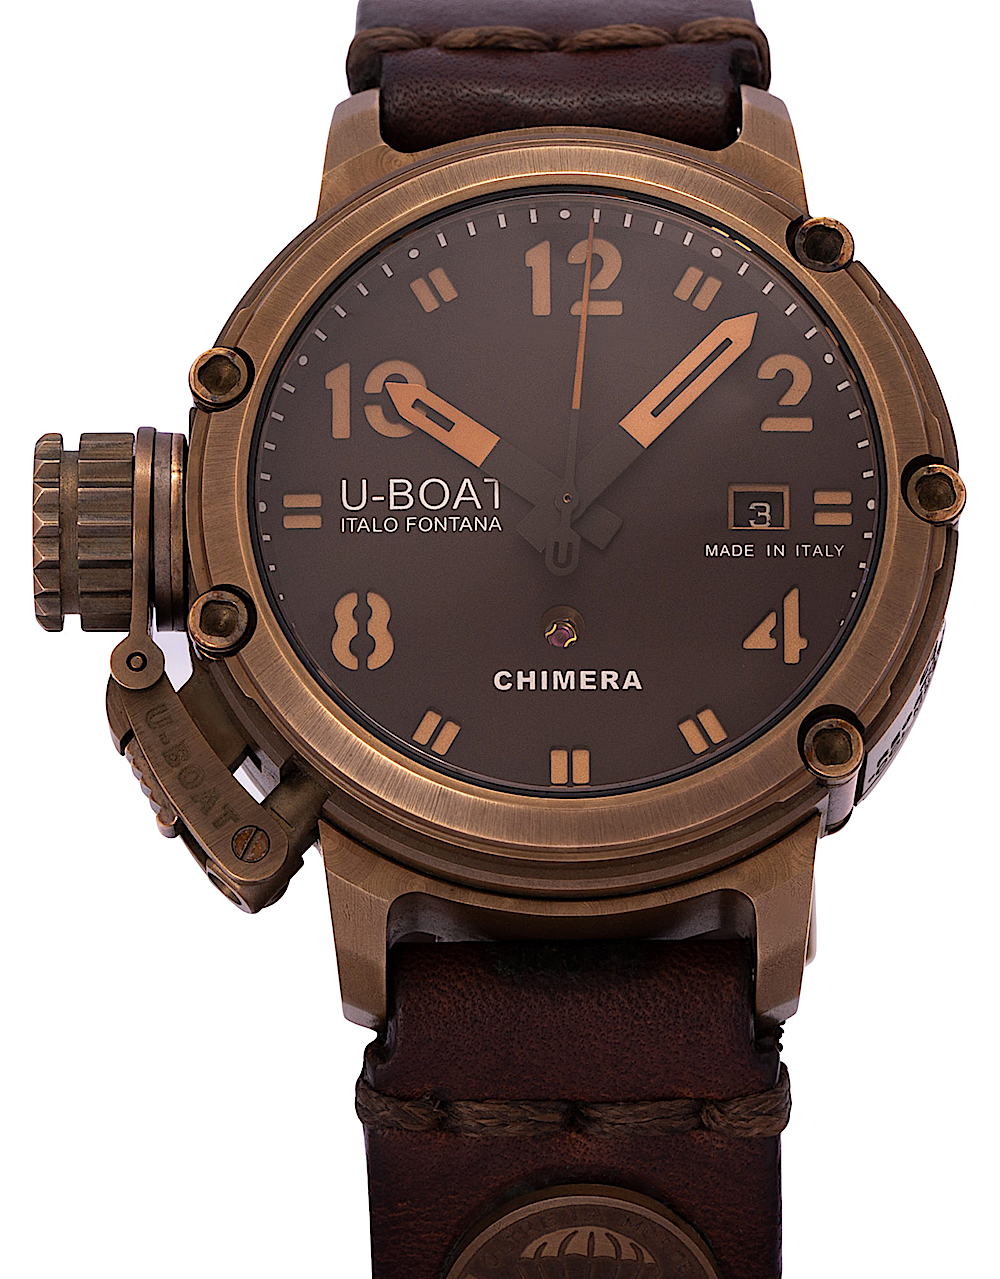 U-Boat Chimera Bronze Limited Edition